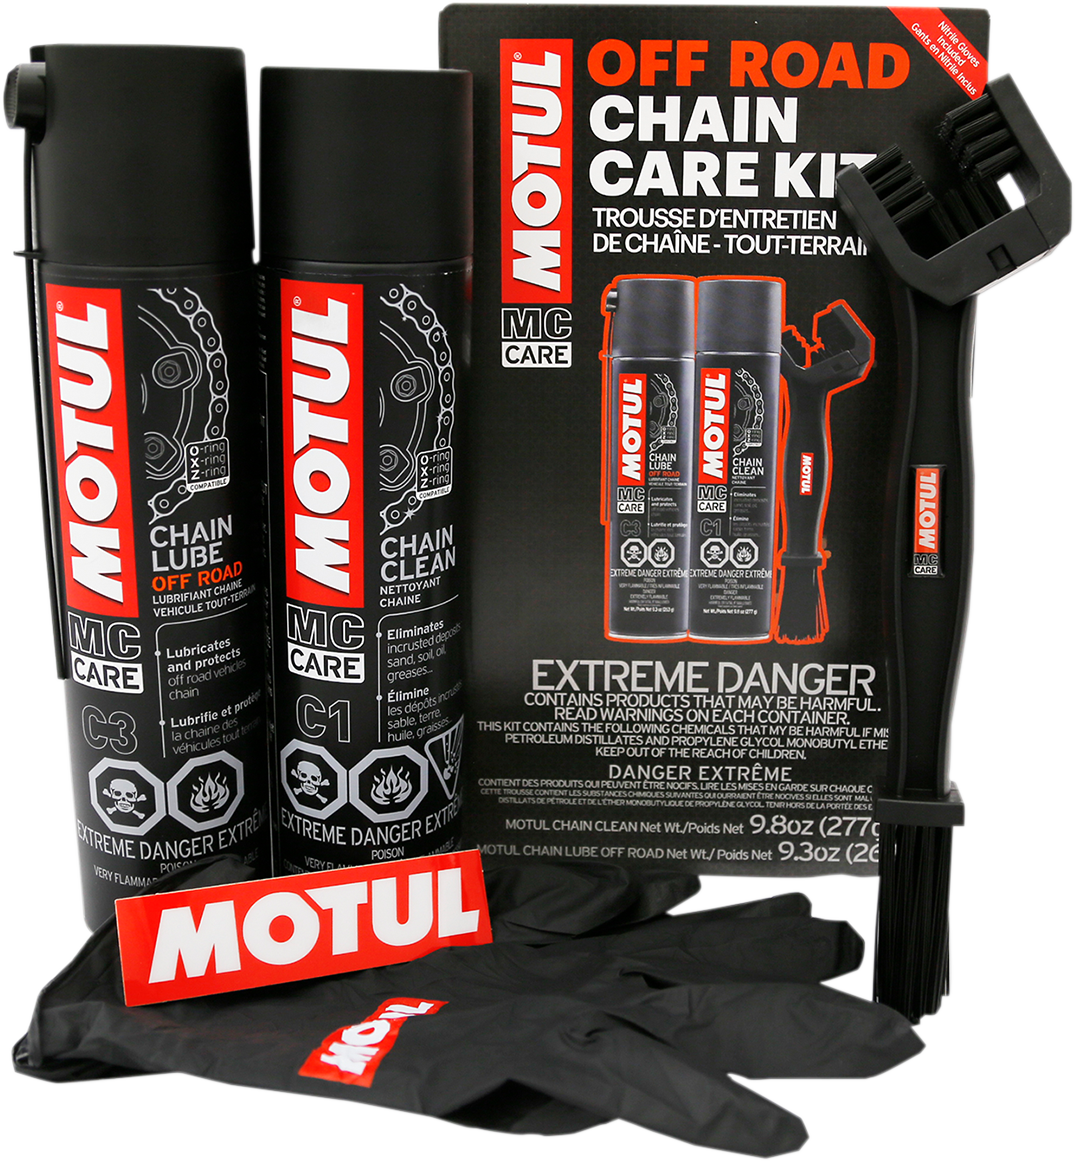 Motul Offroad Dirtbike MX ATV UTV Side by Side Dual Sport Chain Lube Care Kit